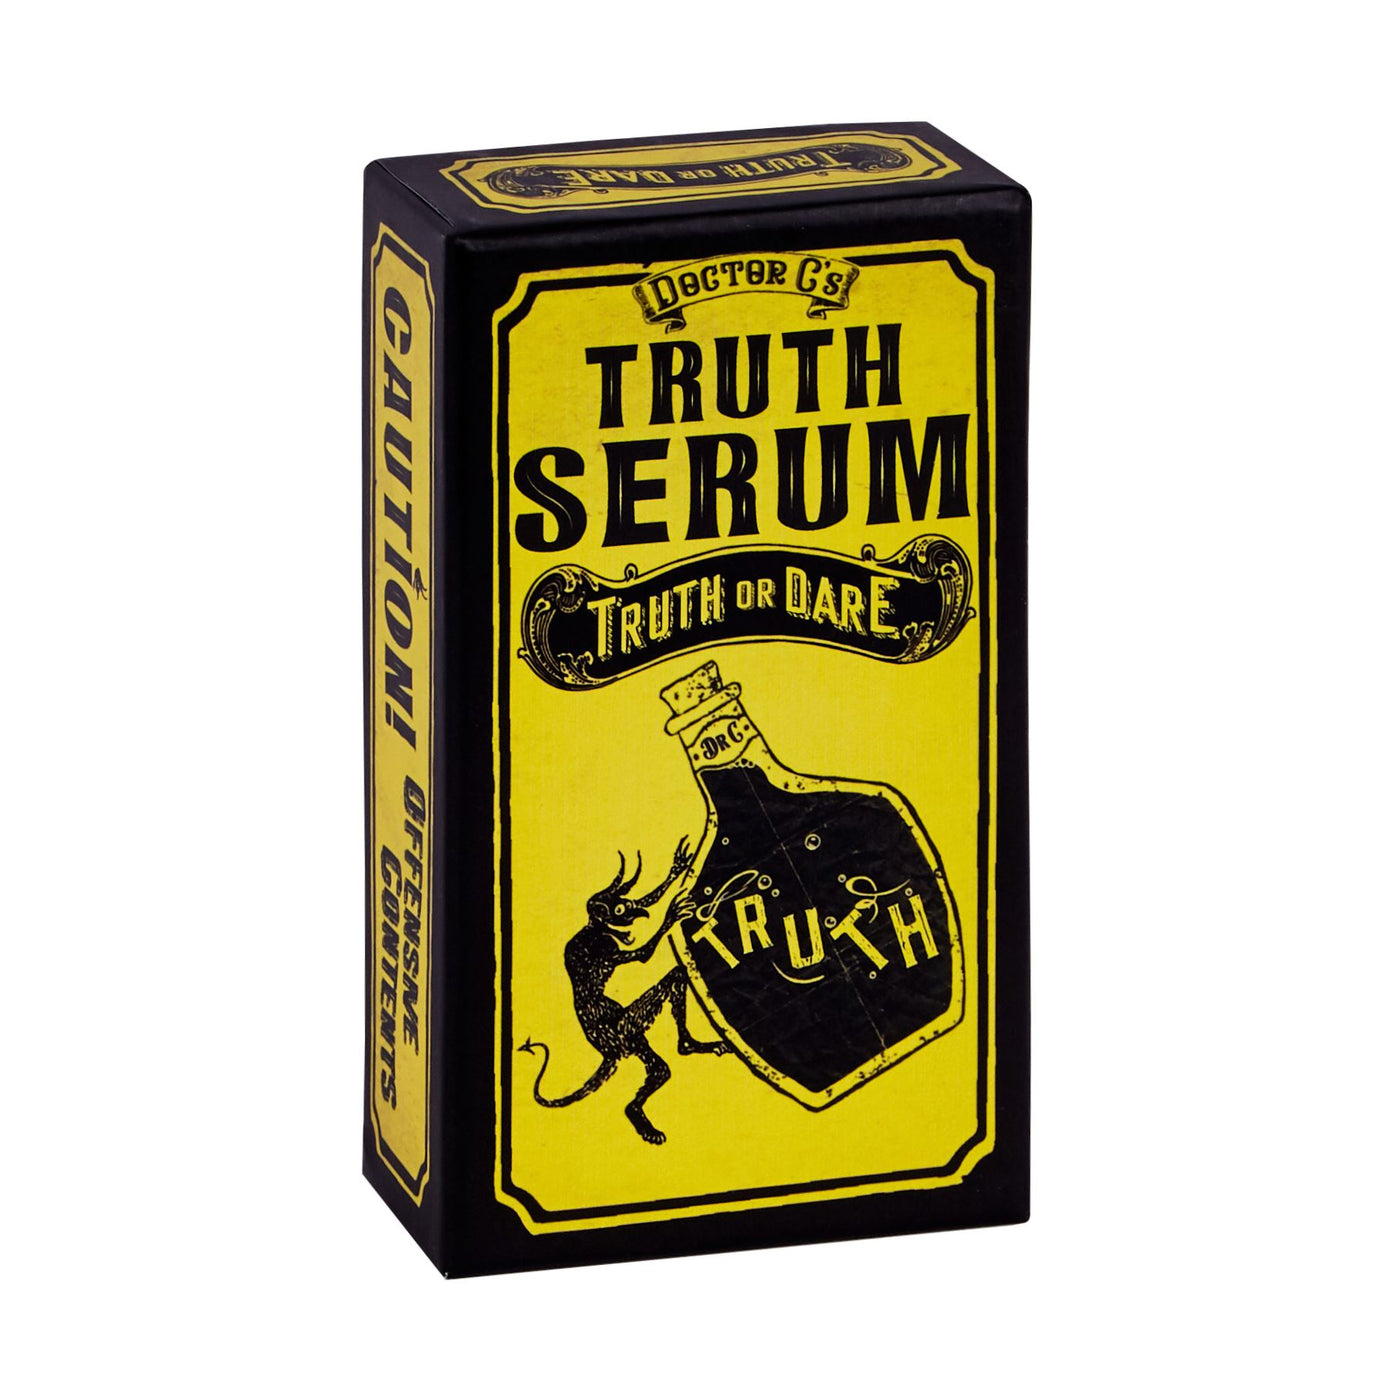 Truth Serum: Truth or Dare